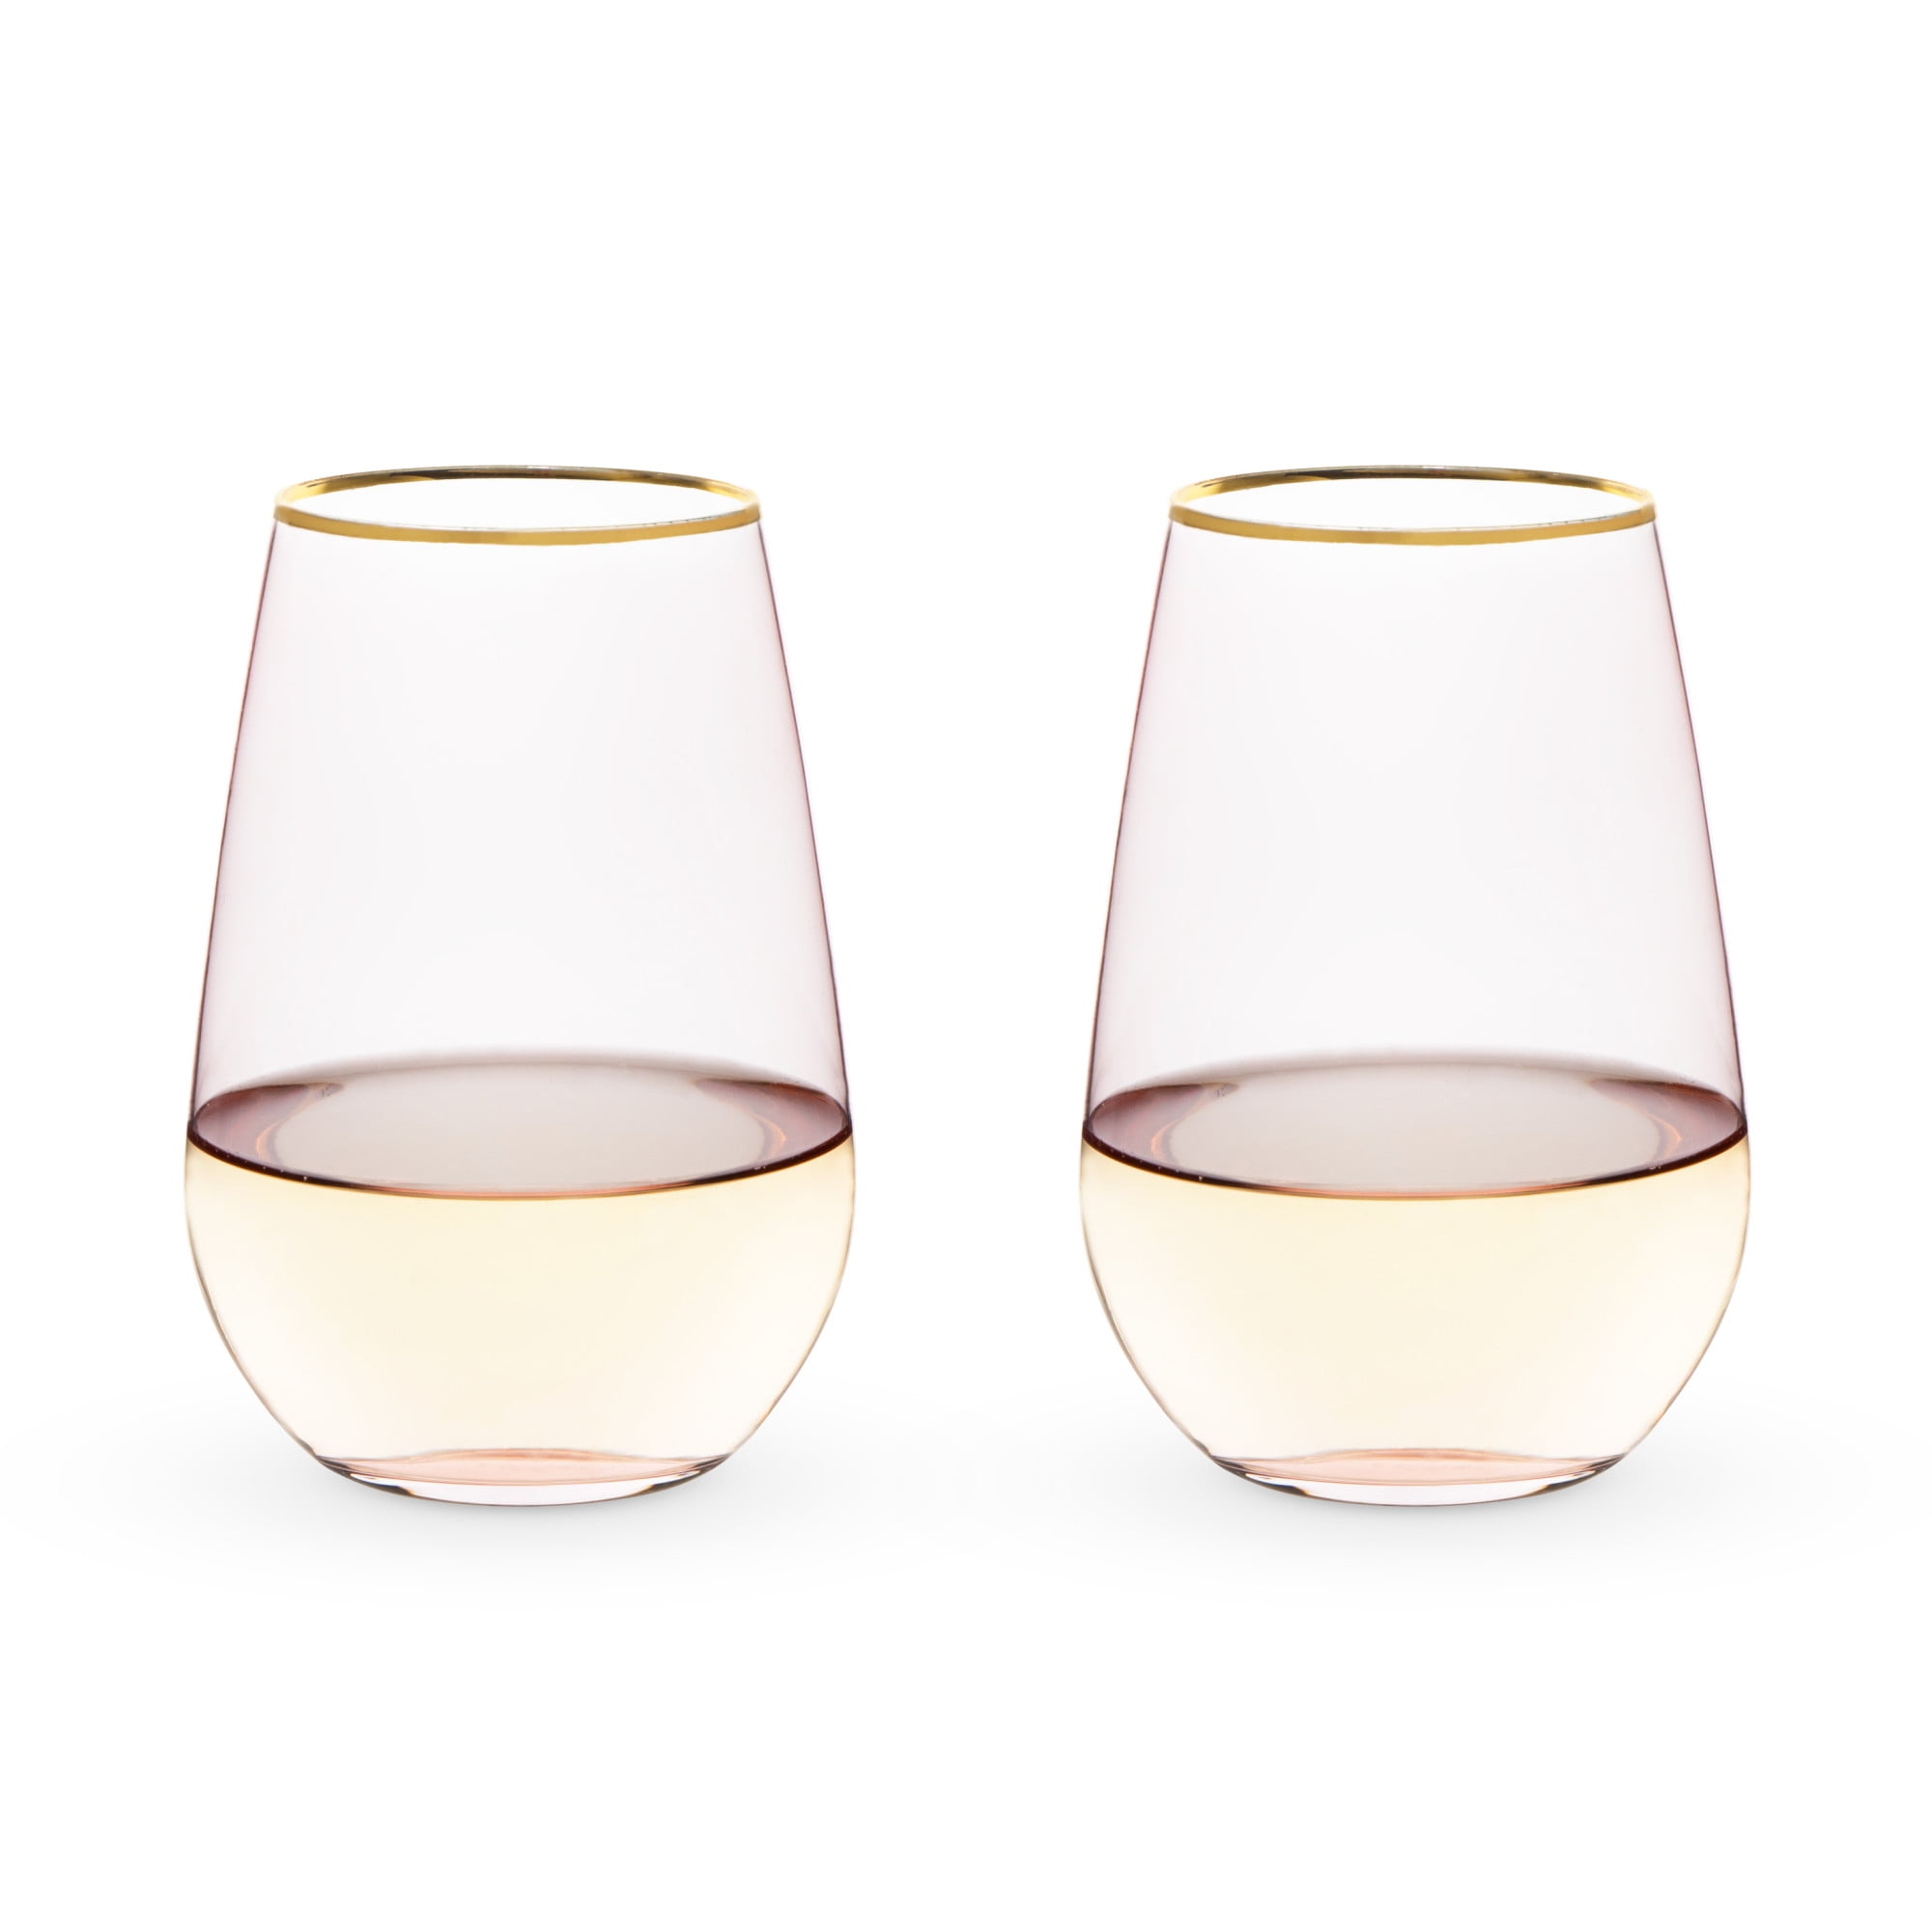 x1 Stemless Crystal Wine Glass 3D Spring Pink Flower Inside NEW